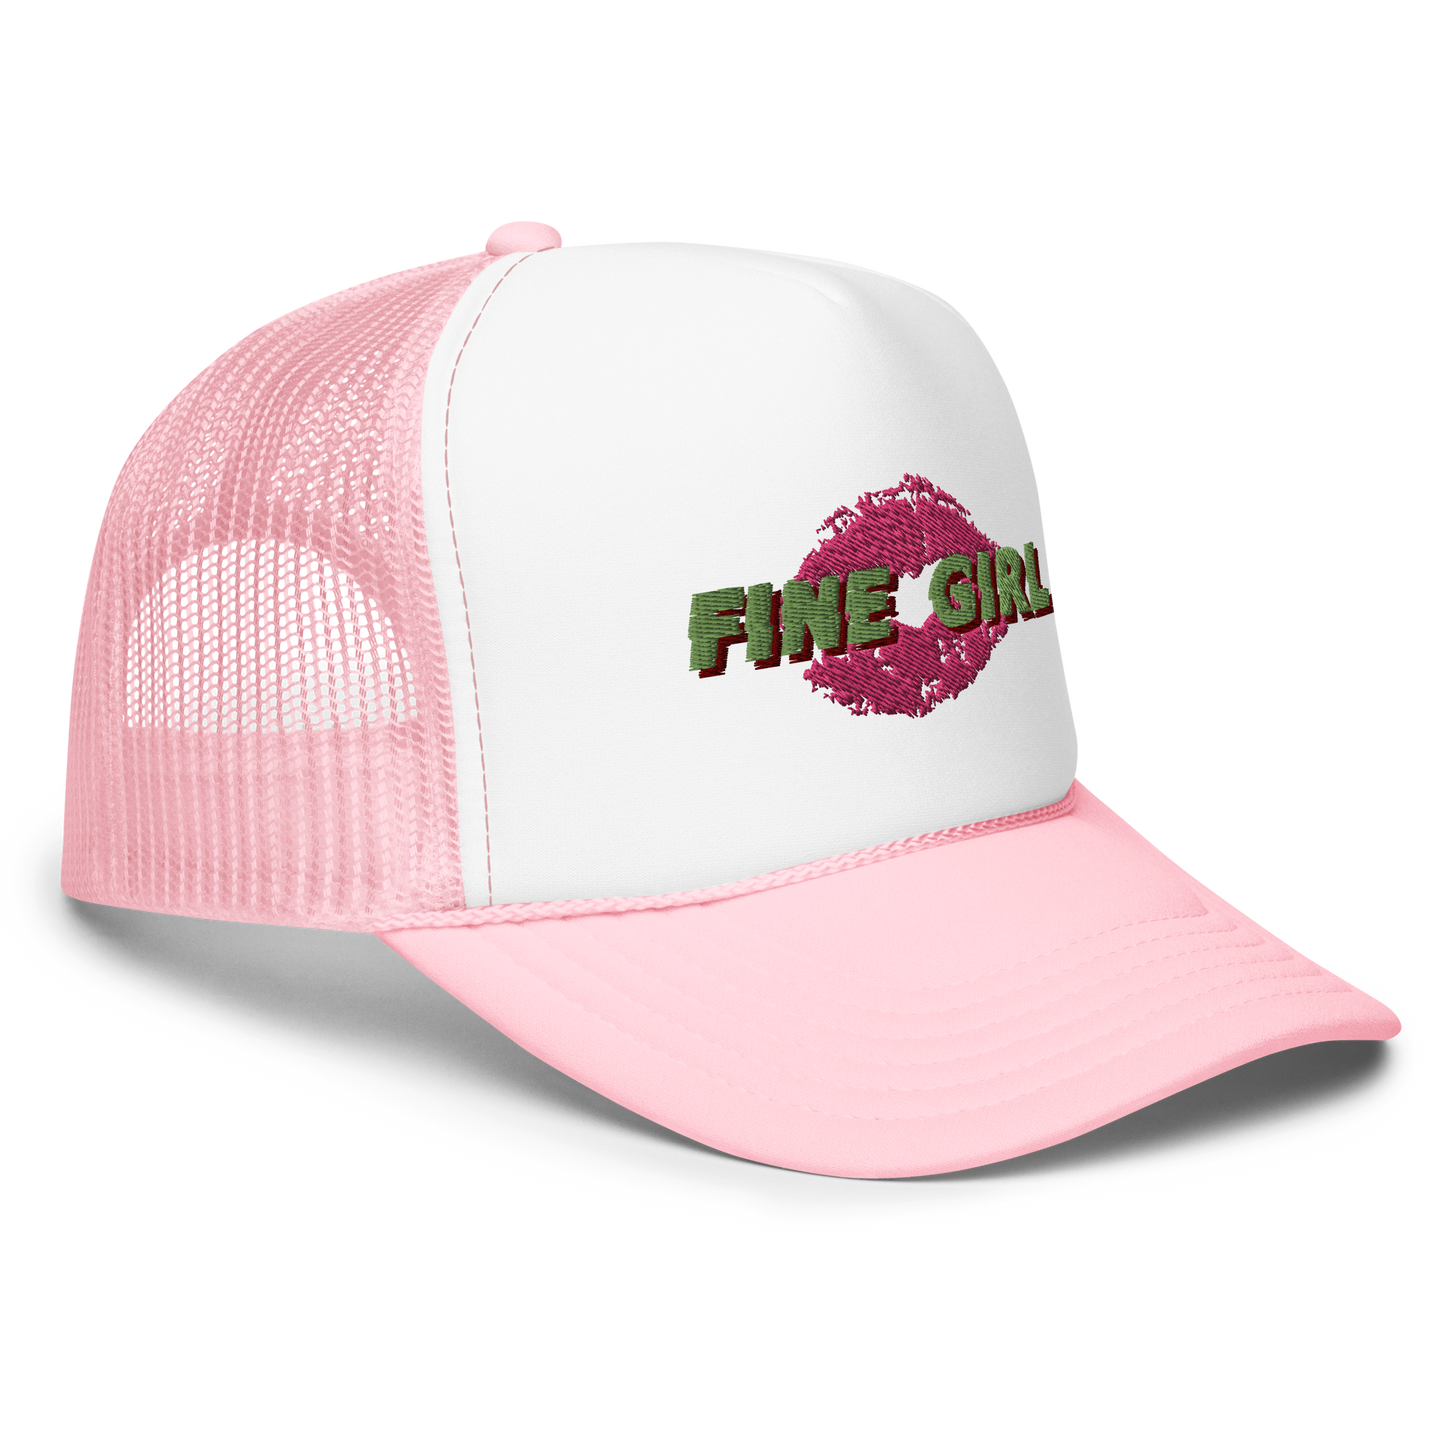 Pink FINE GIRL Trucker hat